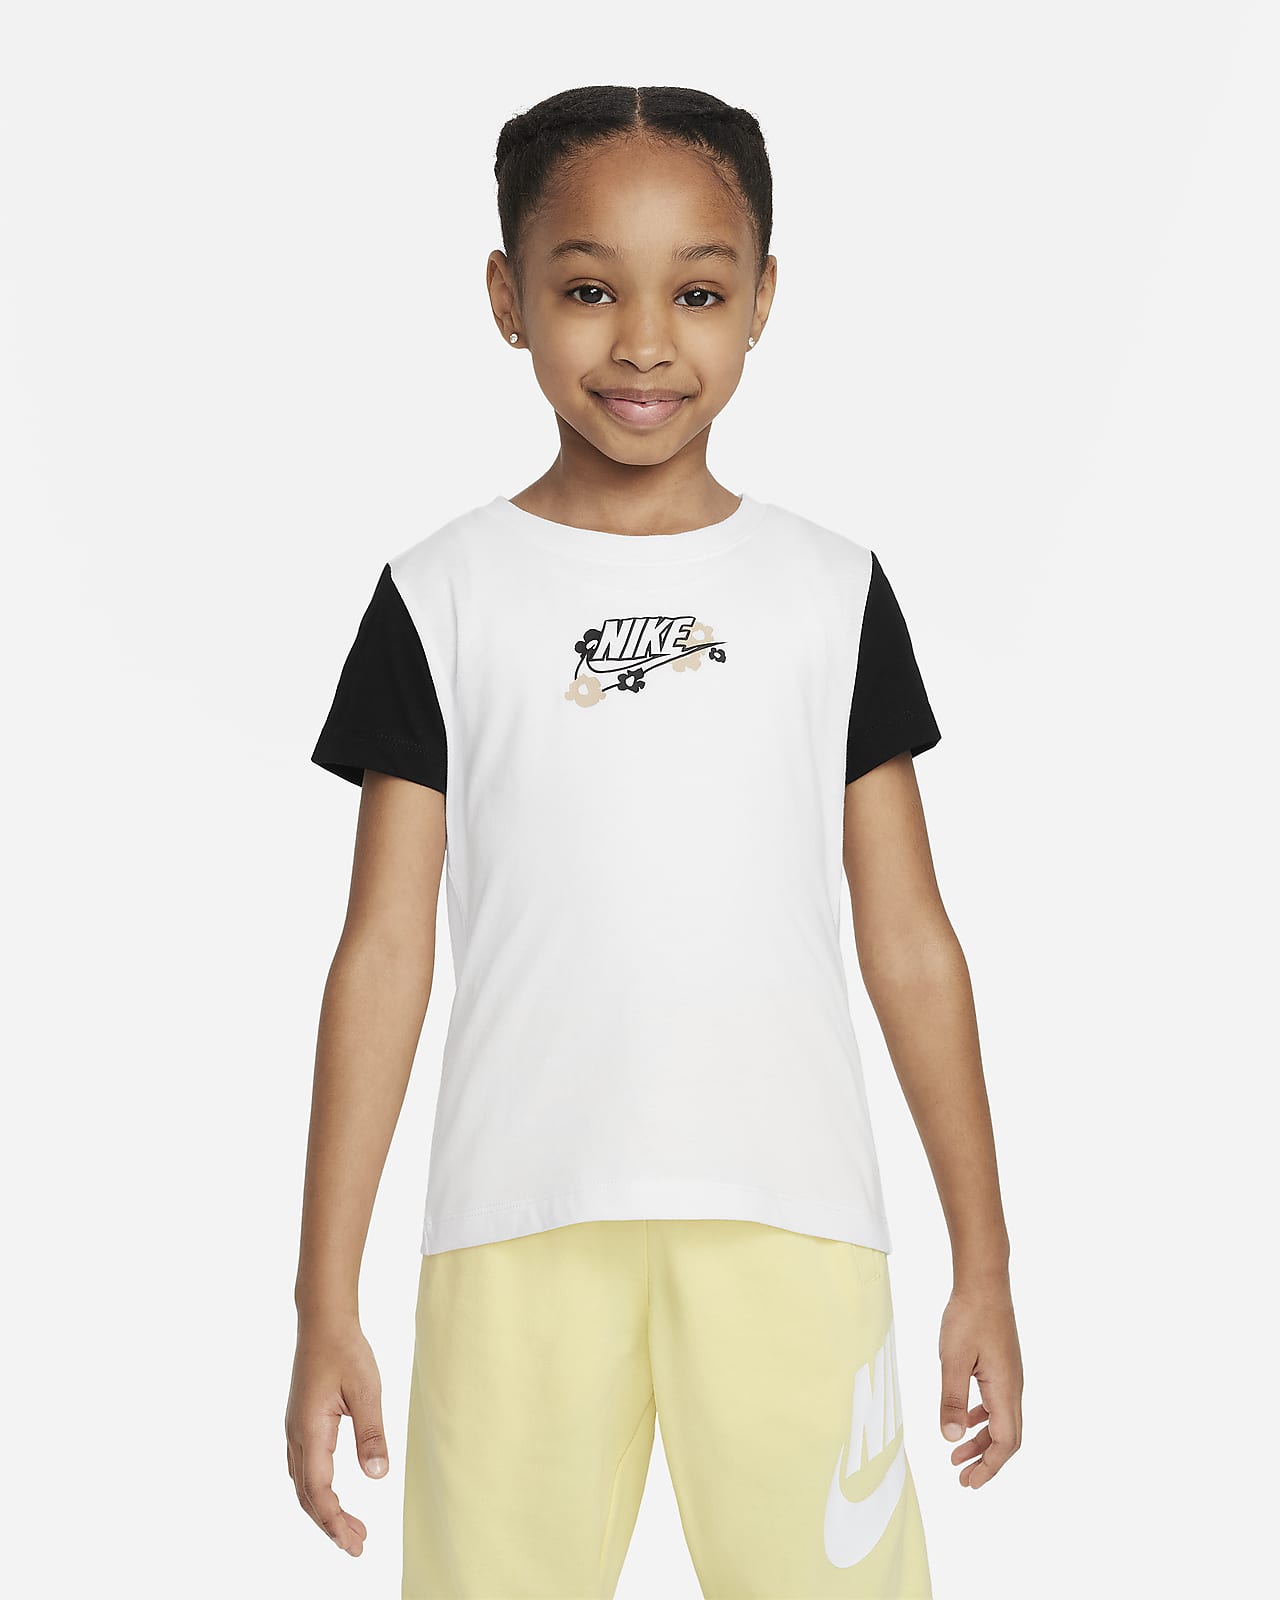 Nike "Your Move" T-Shirt mit Grafik für jüngere Kinder